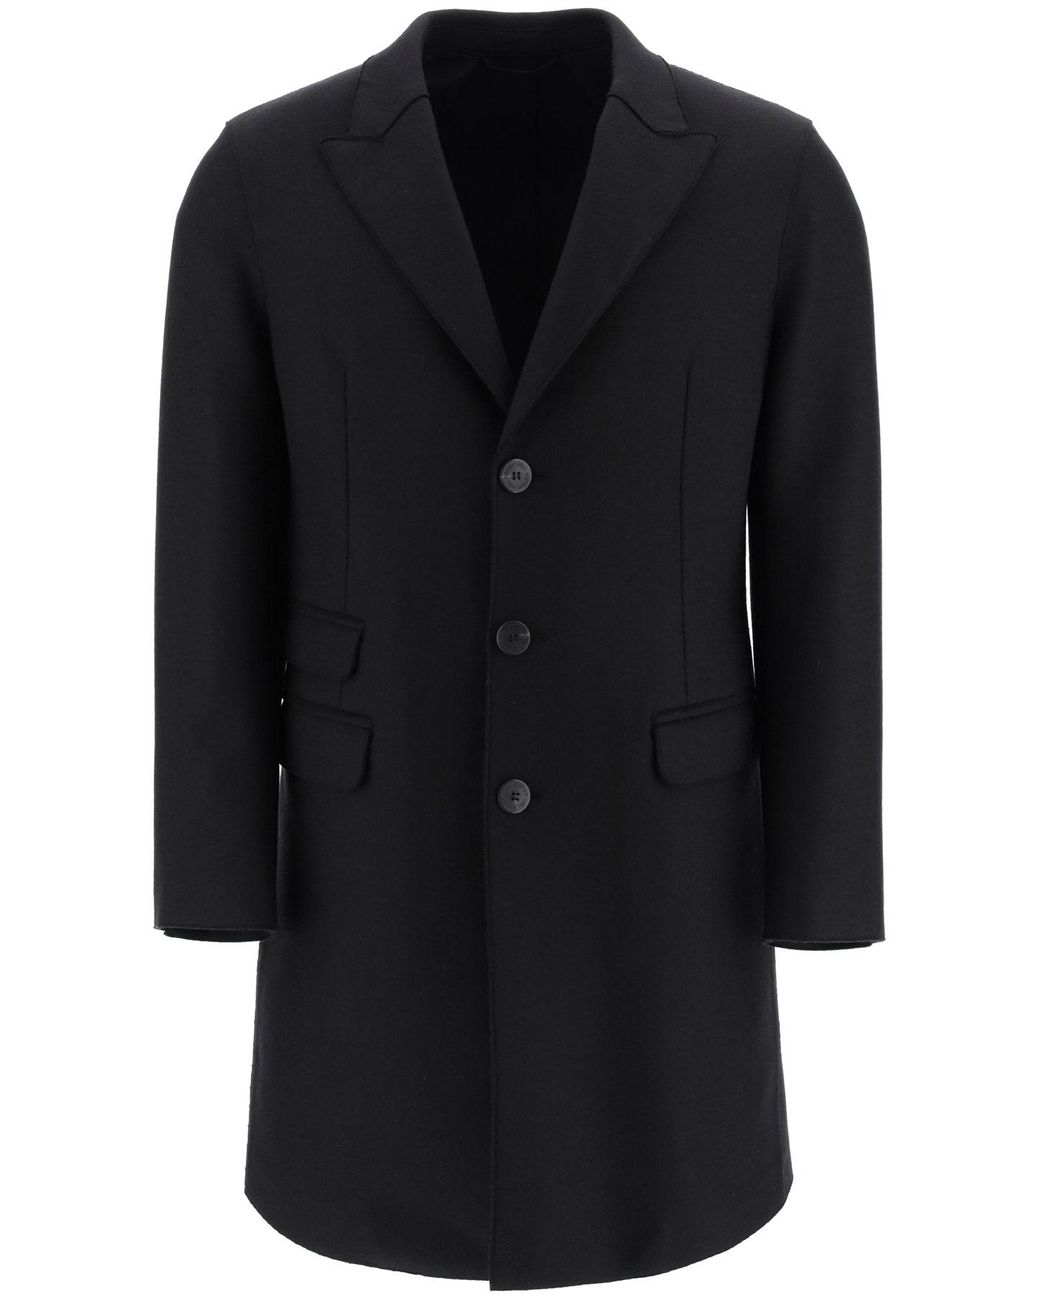 Neil Barrett Raw-cut Wool Coat in Black for Men - Lyst